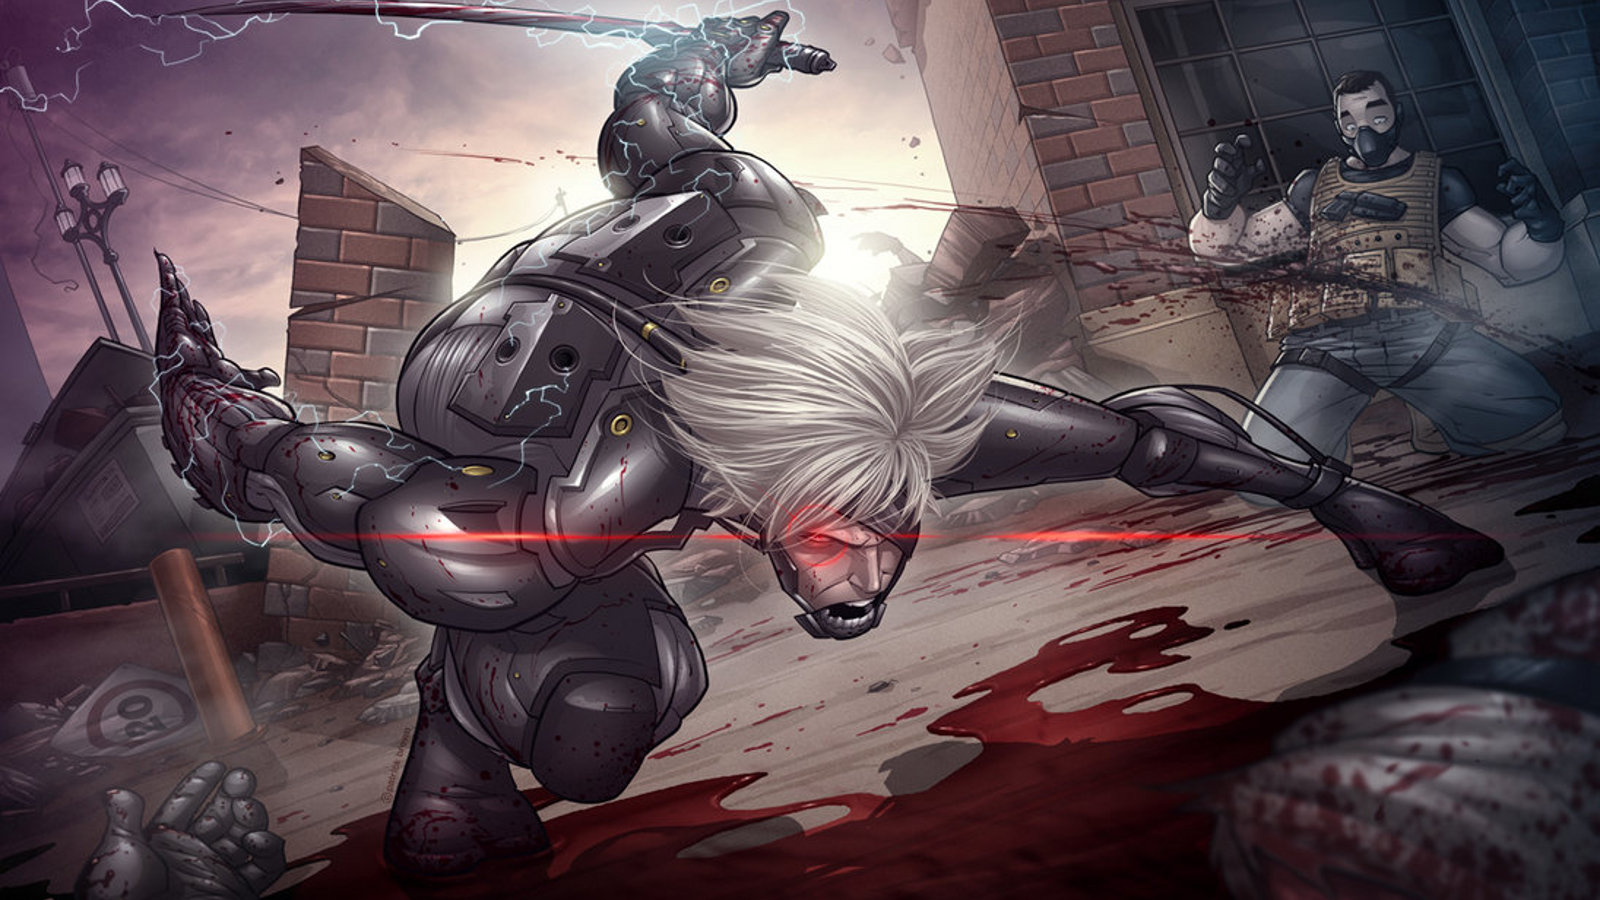 Awesome Metal Gear Rising: Revengeance (MGR) free wallpaper ID:130610 for hd 1600x900 desktop